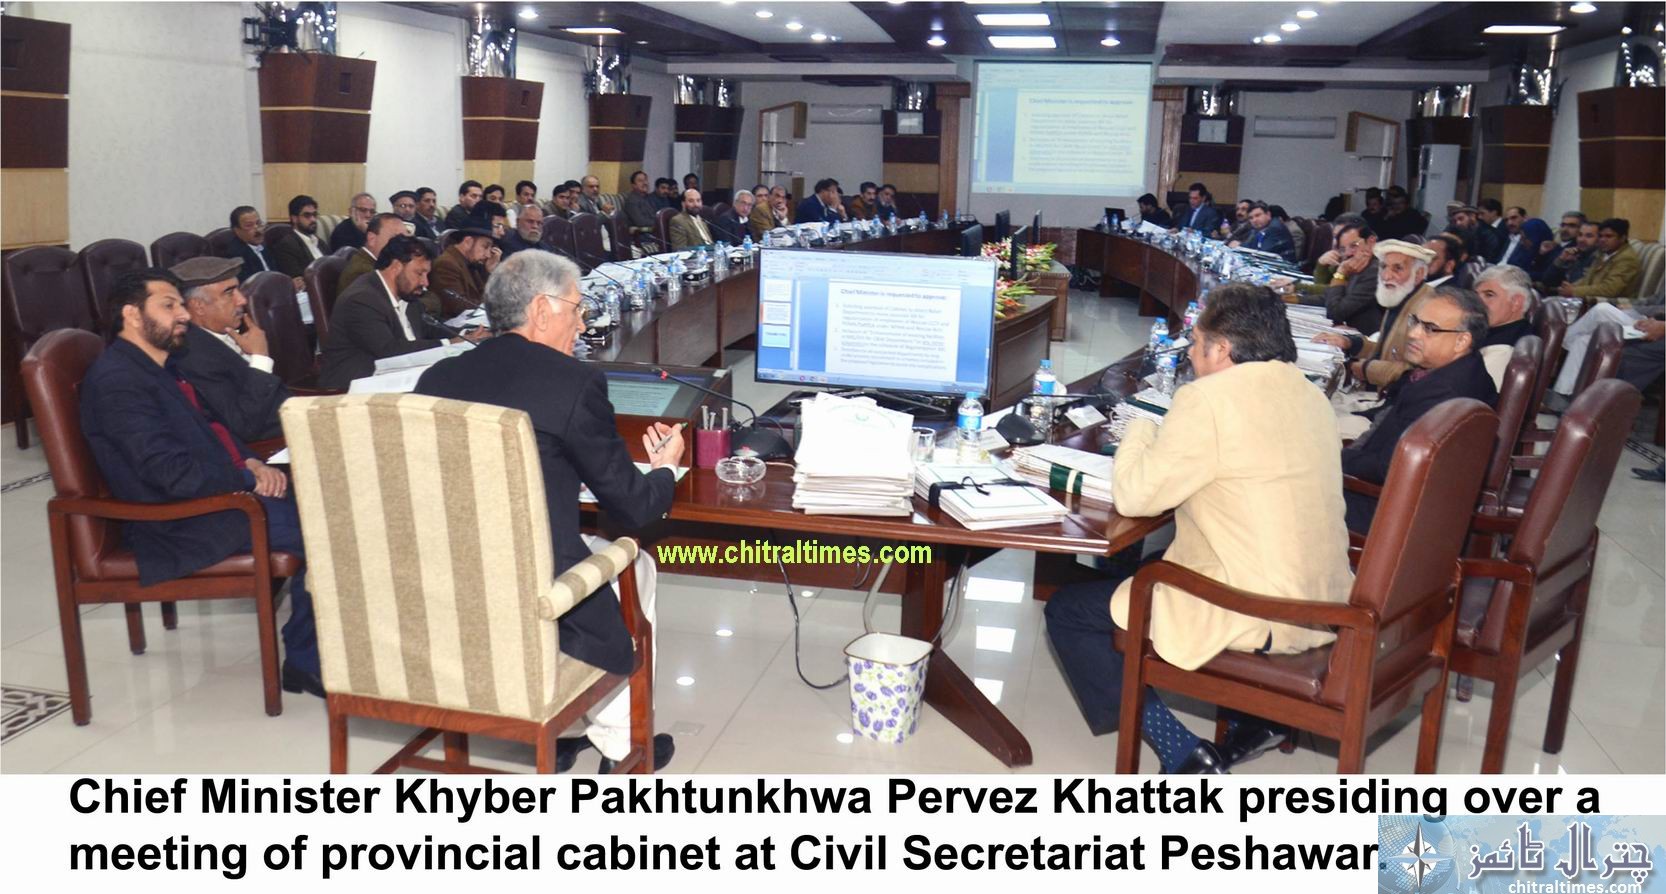 Chief Minister Khyber Pakhtunkhwa Pervez Khattak presiding over a meeting of provincial cabinet at Civil Secretariat Peshawar